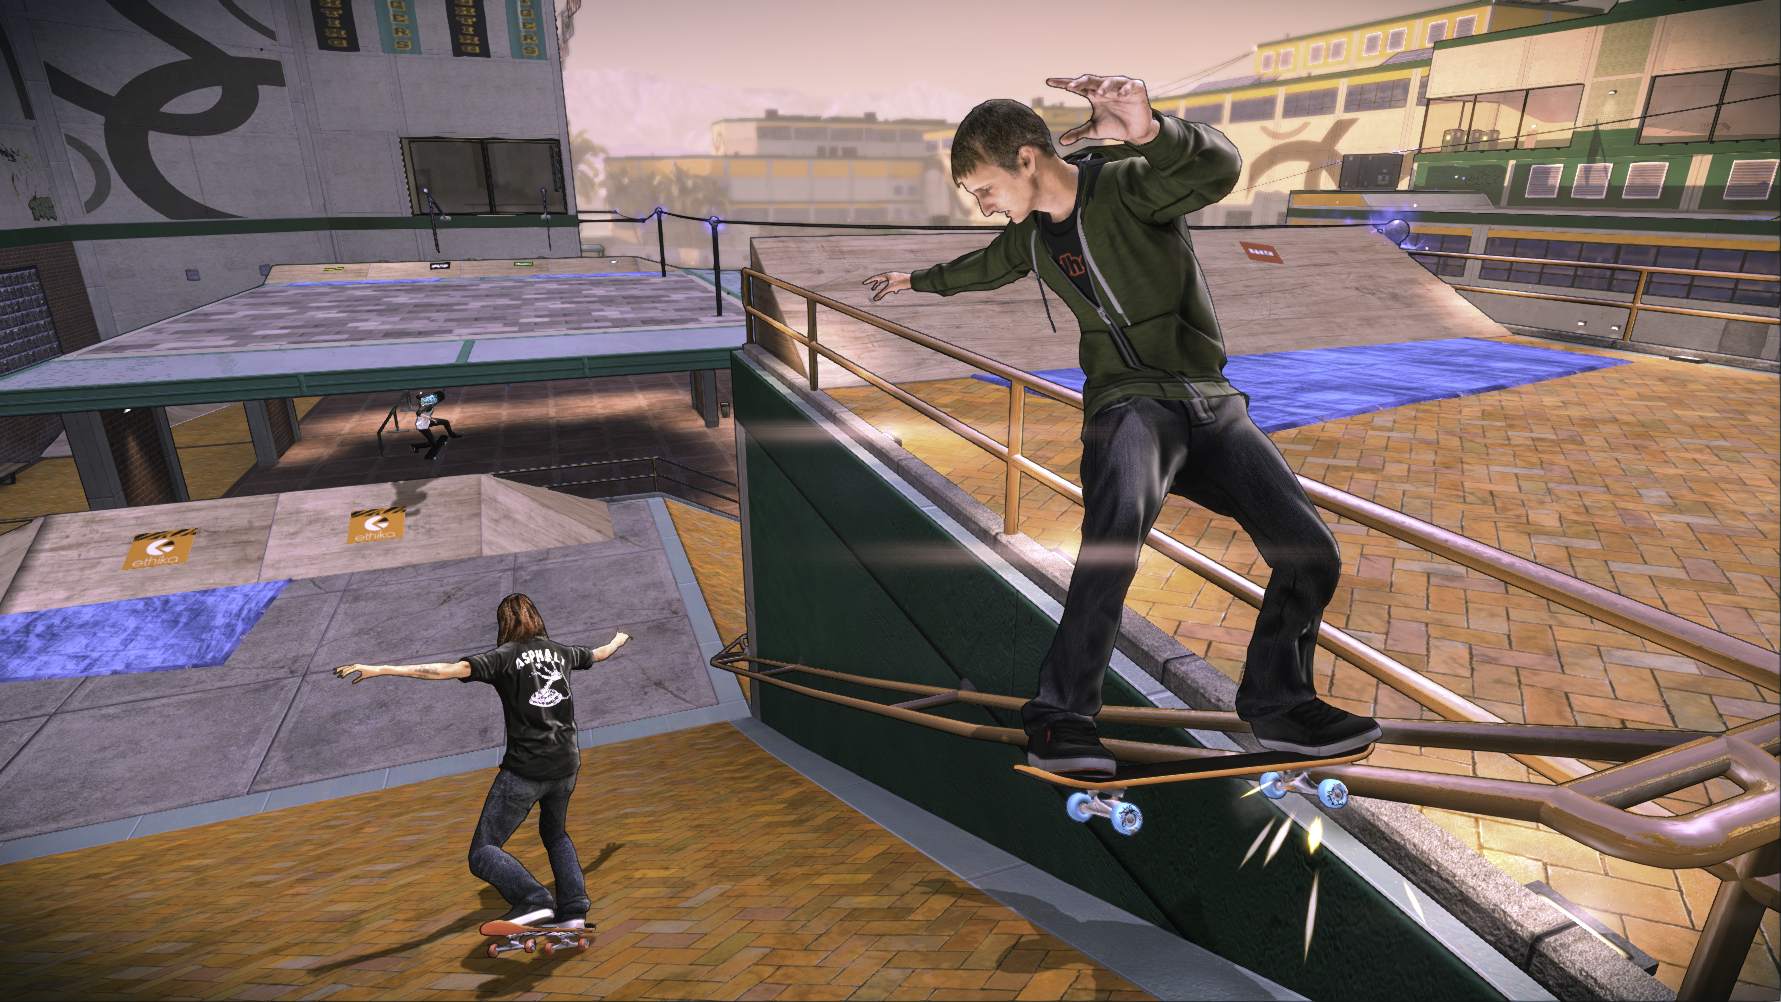 Tony Hawk's Pro Skater 5 Backgrounds, Compatible - PC, Mobile, Gadgets| 1781x1002 px